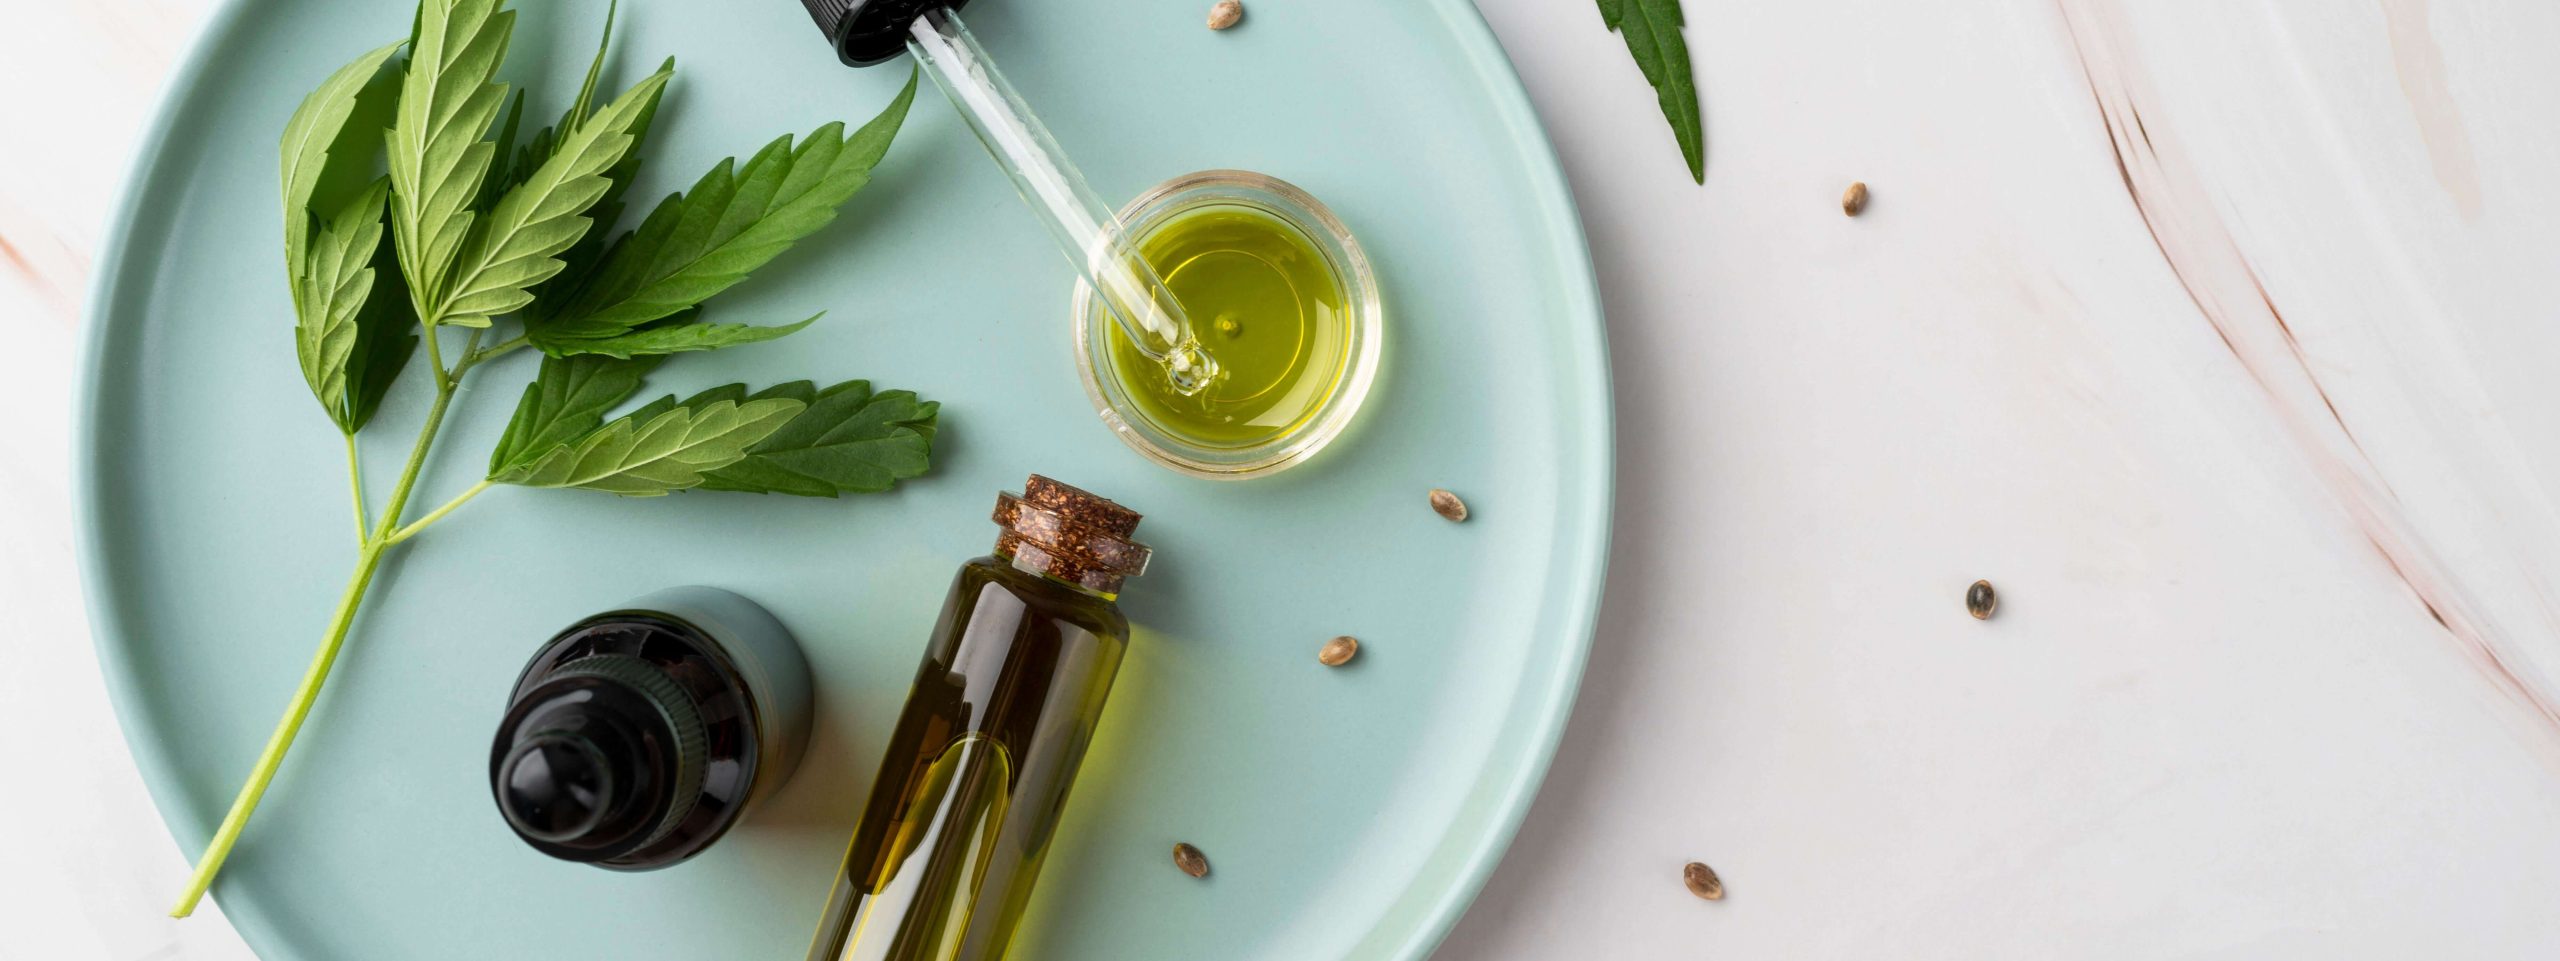 DIY Recipes Using Hemp Seed Oil For Eczema Prone Skin- Homemade Recipes